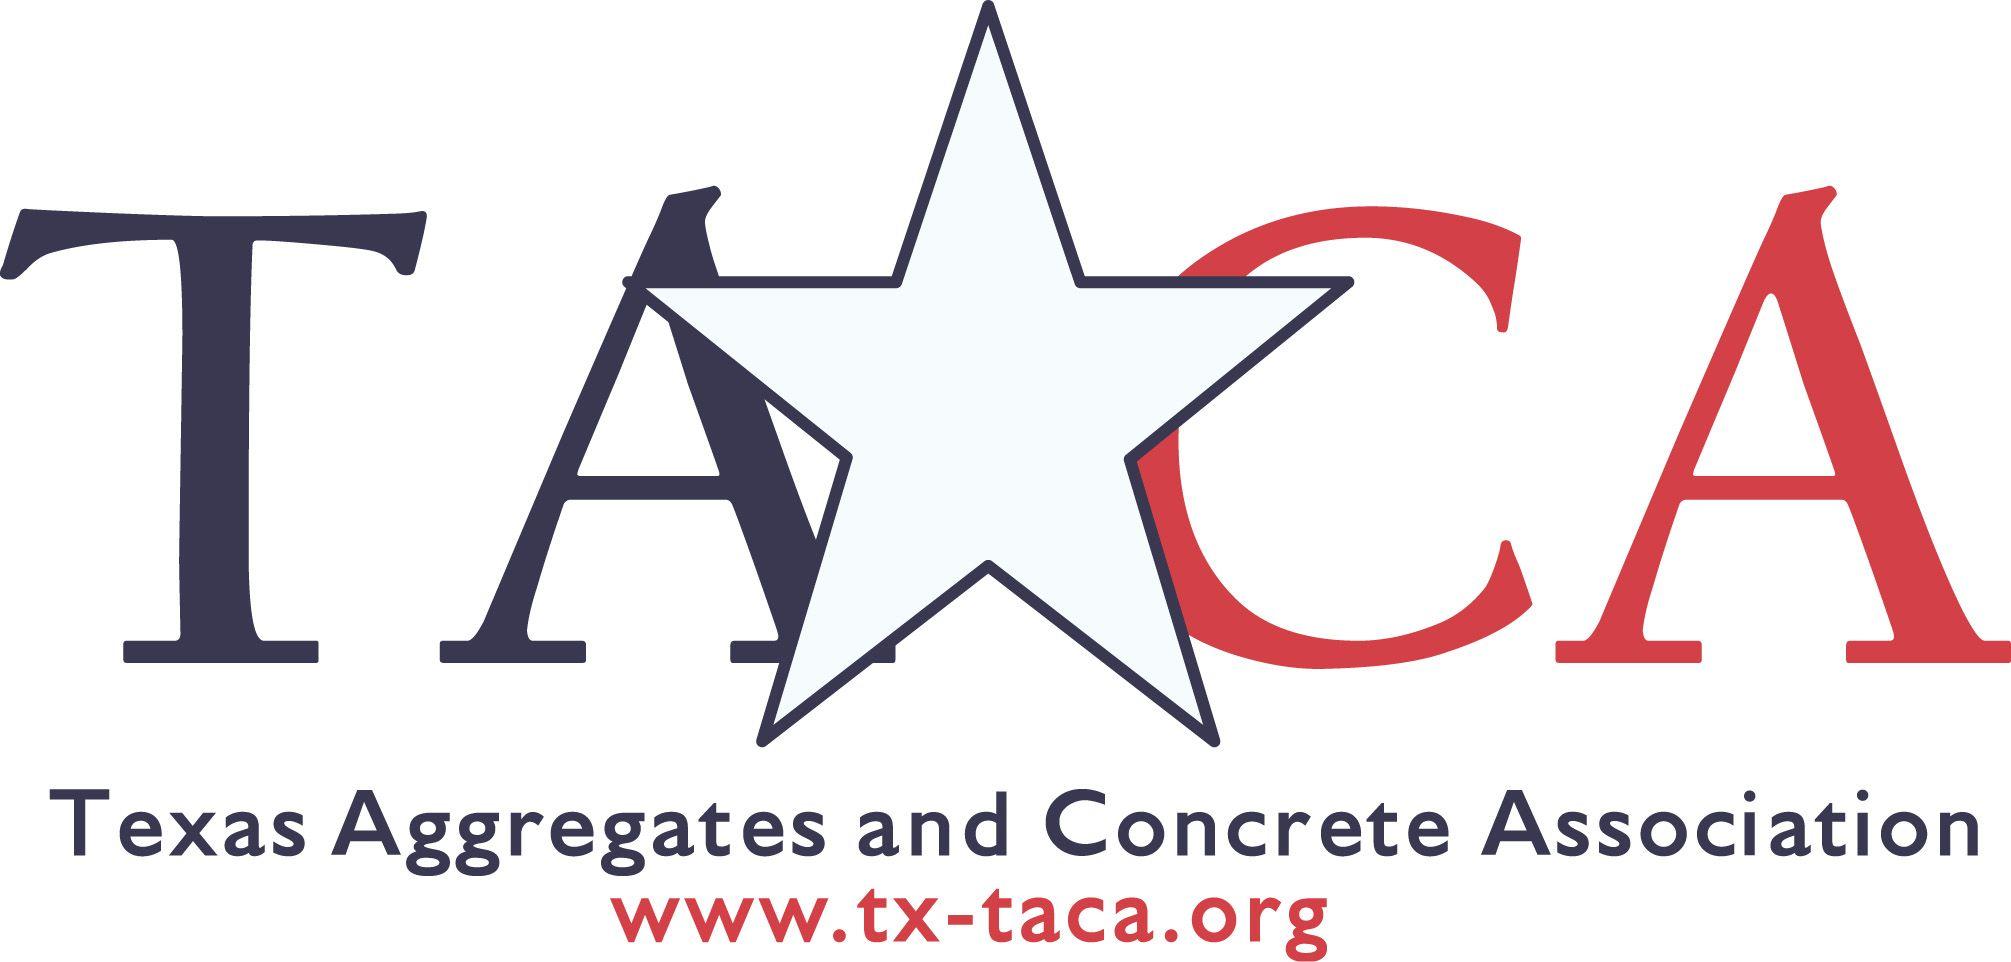 Taca Logo - TACA Logo White Star. Texas Aggregates and Concrete Association